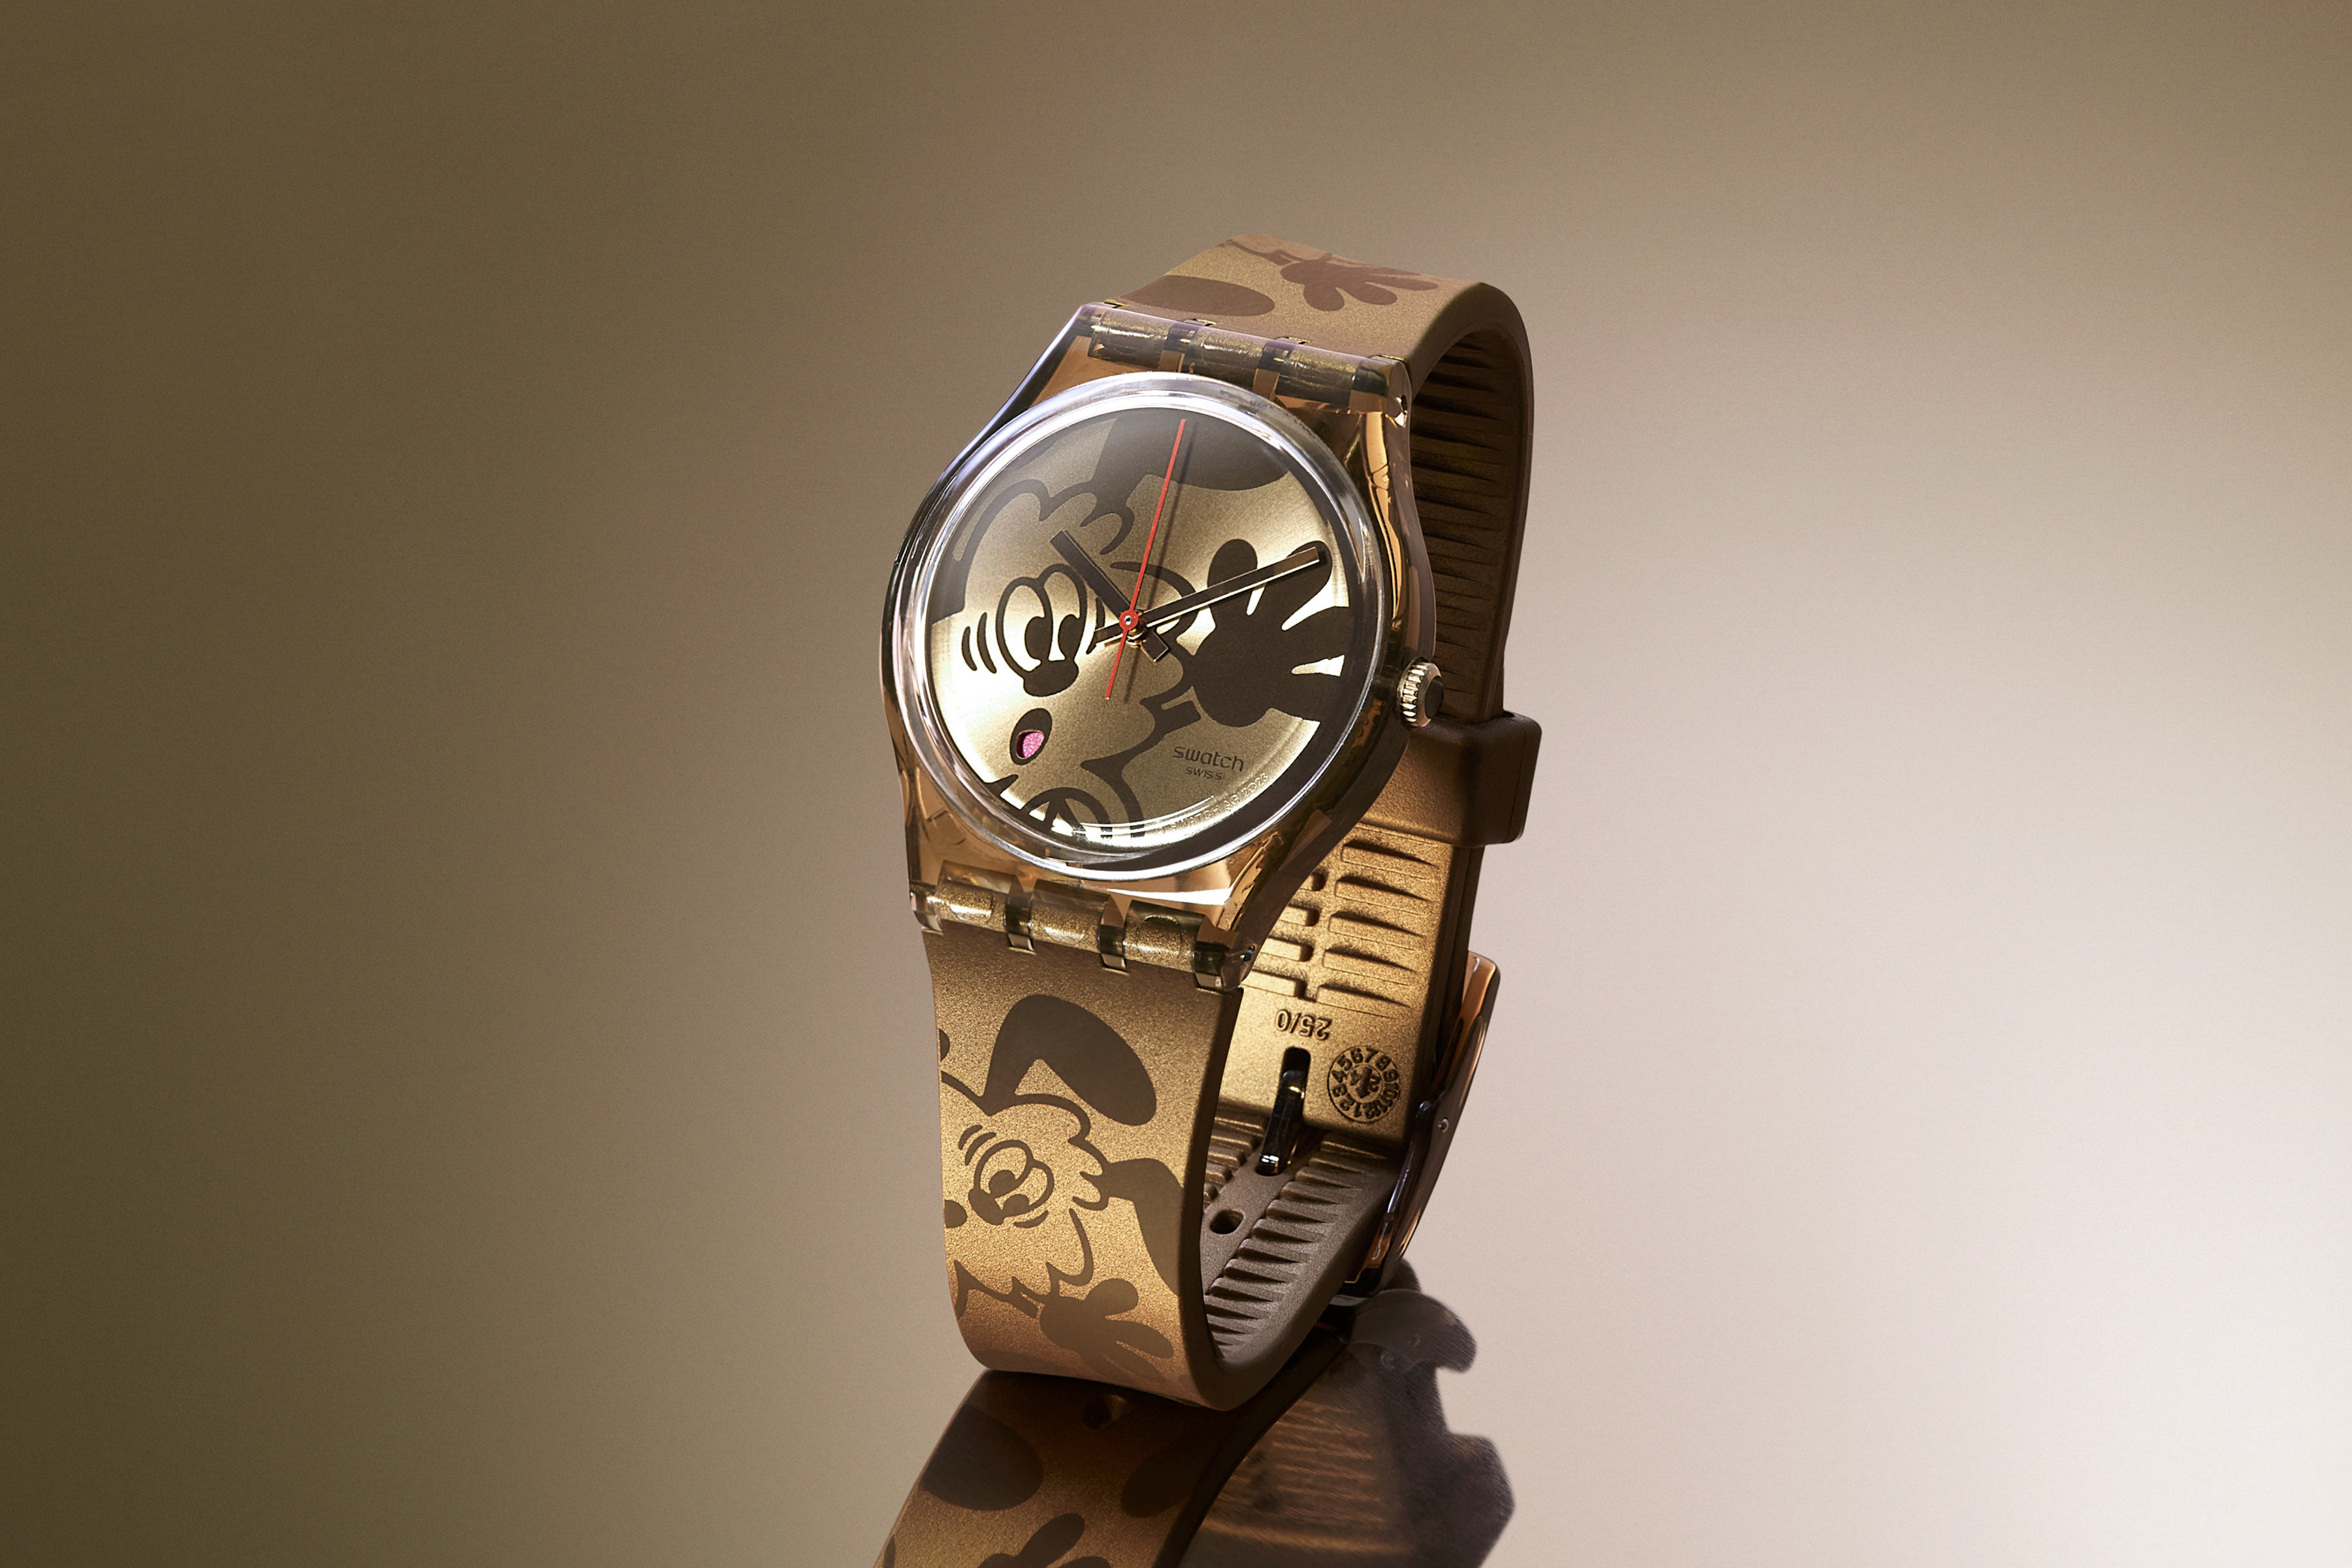 Bronze watch with pop art design against a gradient background